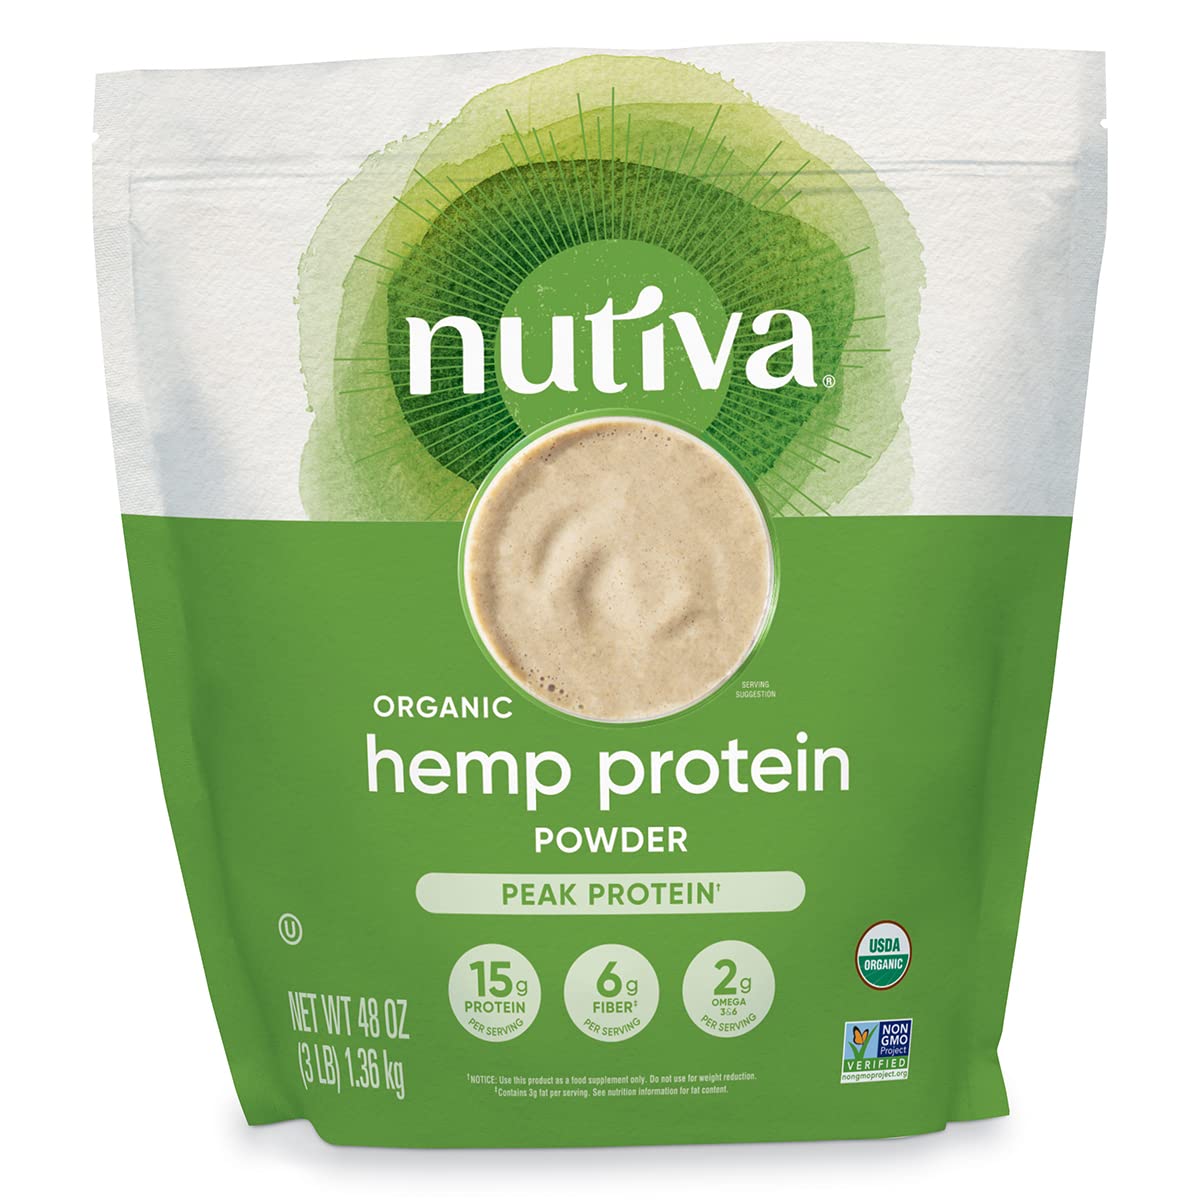 Nutiva Organic Cold-Pressed Raw Hemp Seed Protein Powder, Peak Protein, 3 Pound, USDA Organic, Non-GMO, Whole 30 Approved, Vegan, Gluten-Free & Keto, Plant Protein with Essential Amino Acids